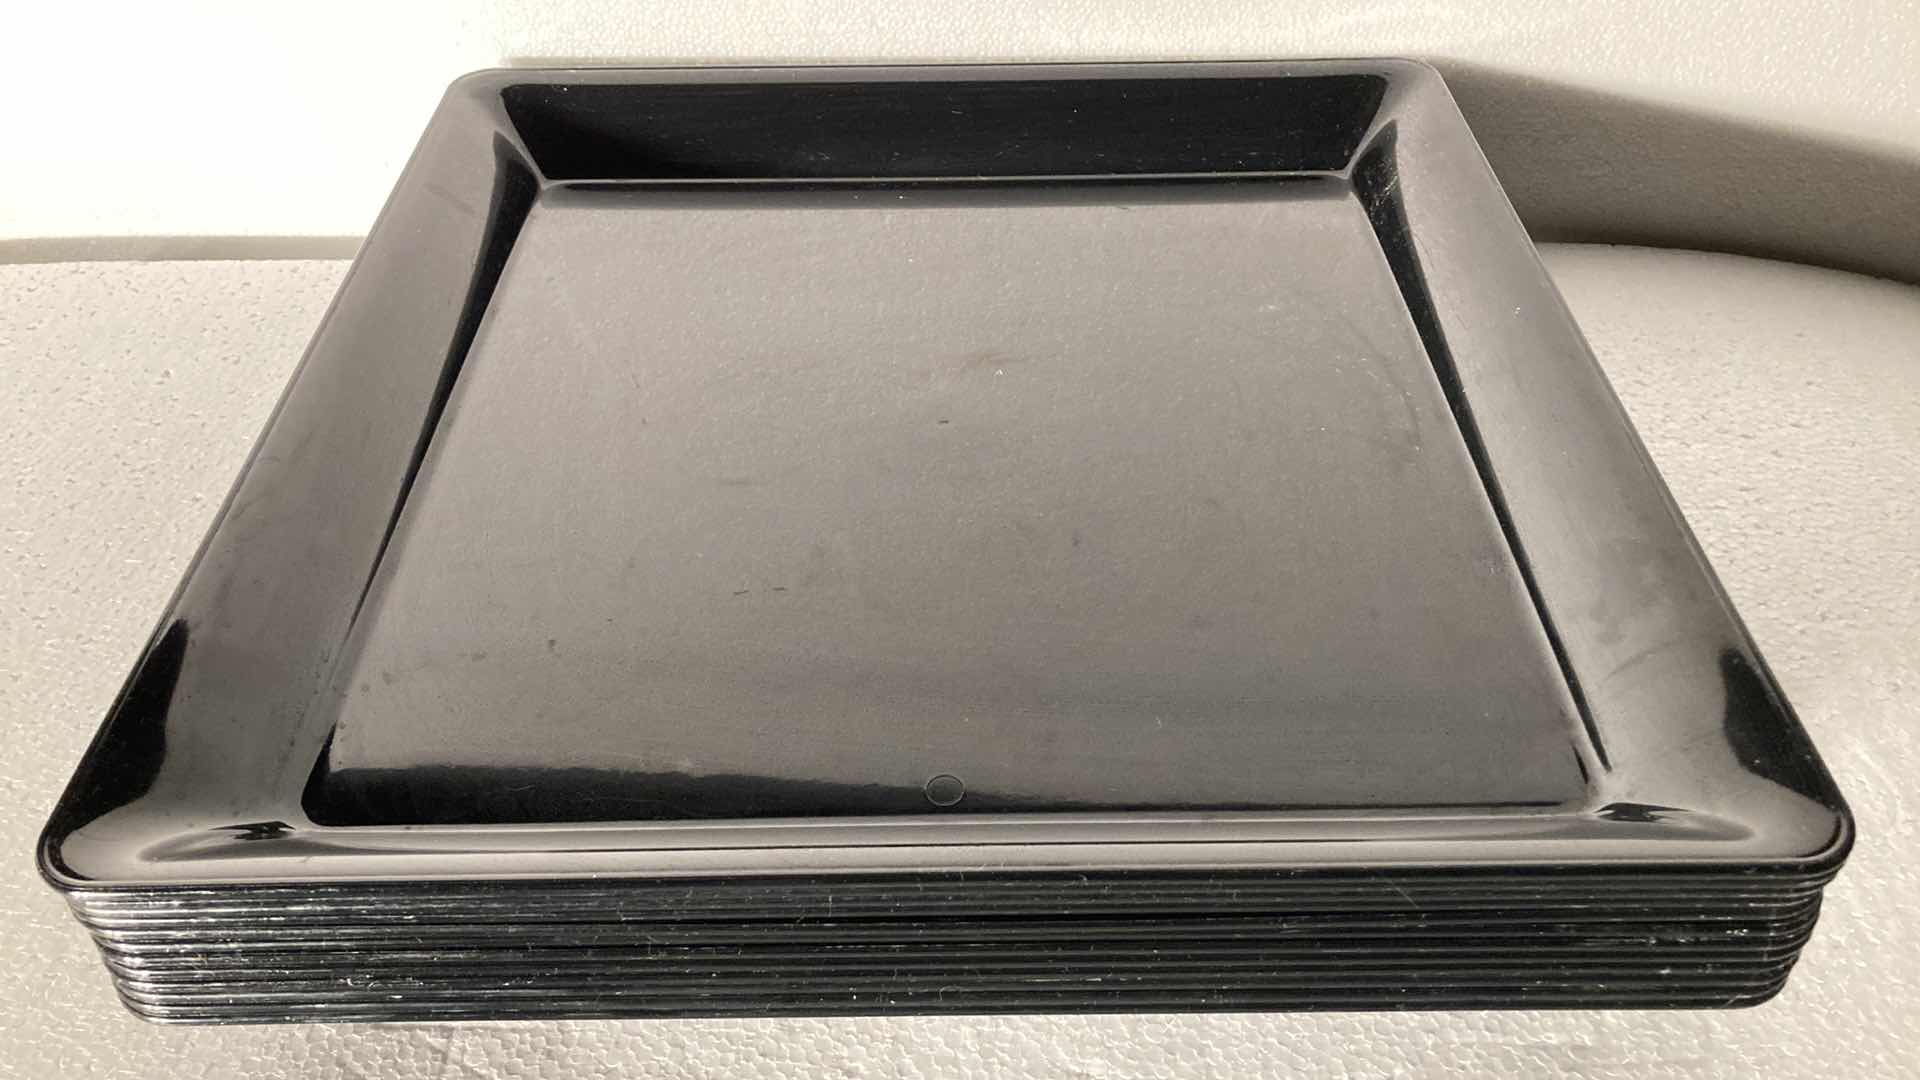 Photo 1 of WADDIGTON NORTH AMERICAN BLACK PLASTIC DISPOSABLE PLATTERS (12) 16” X 16”